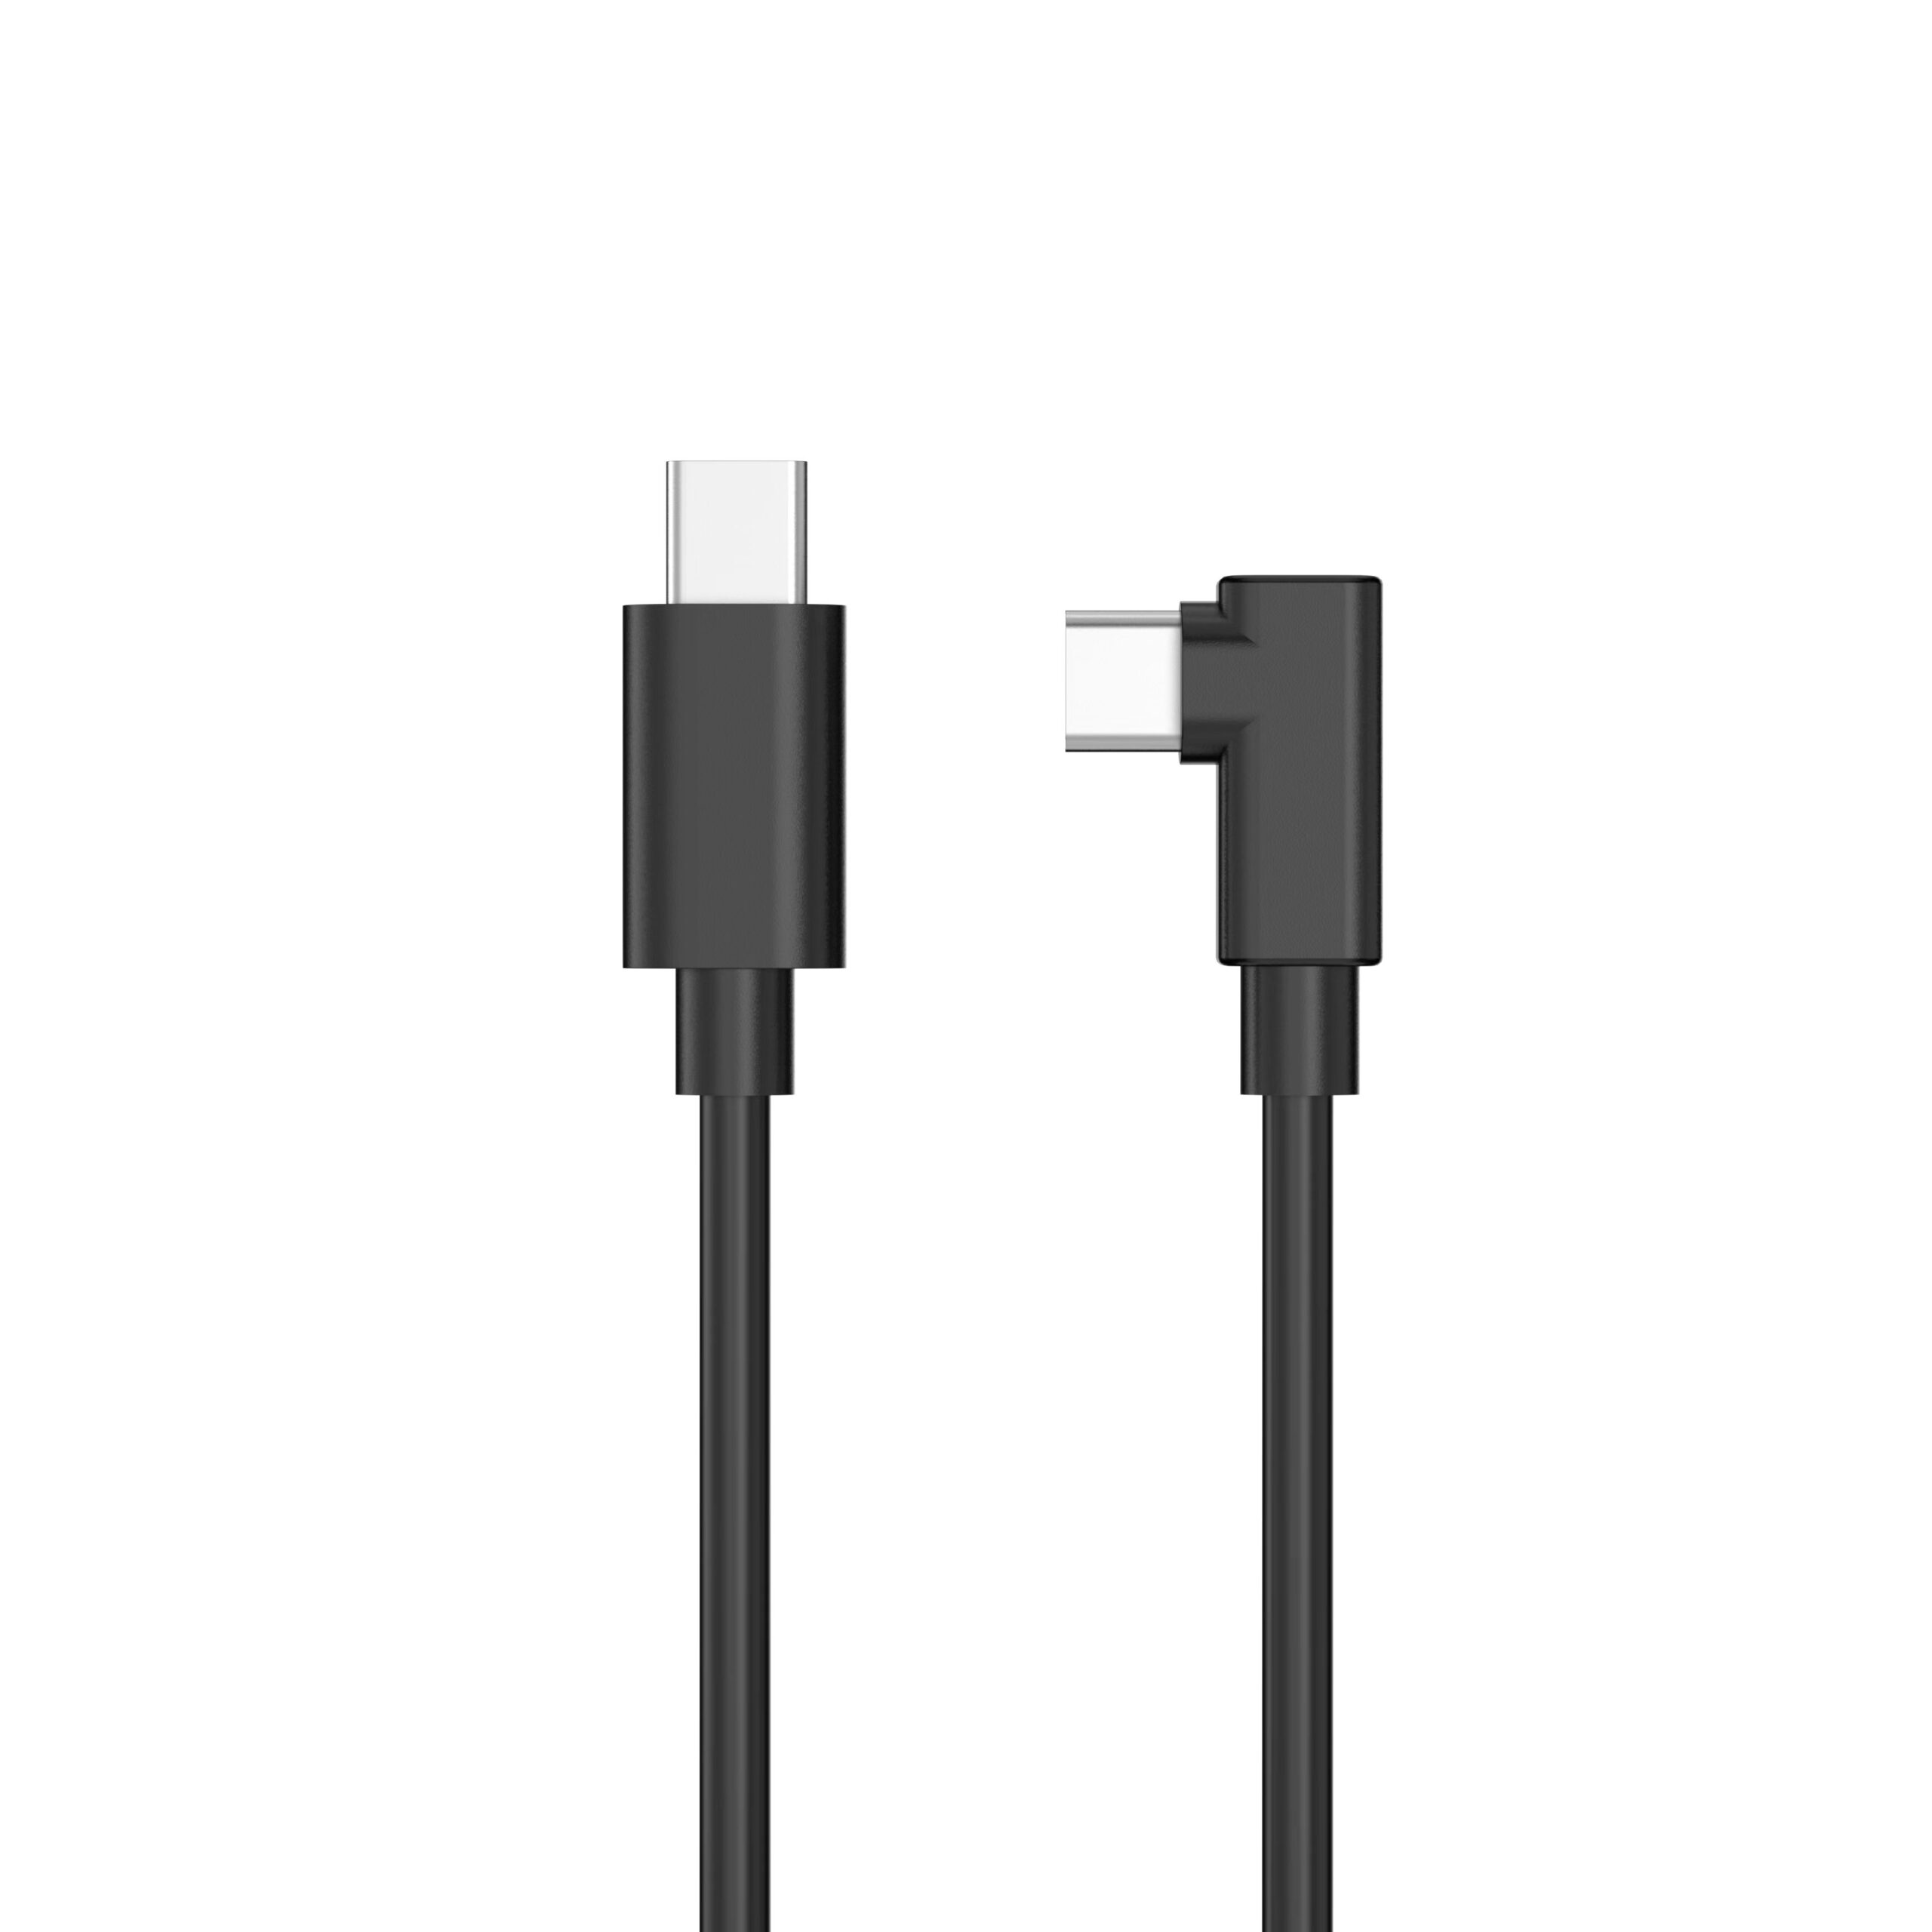 USB 2.0 Standard Cables